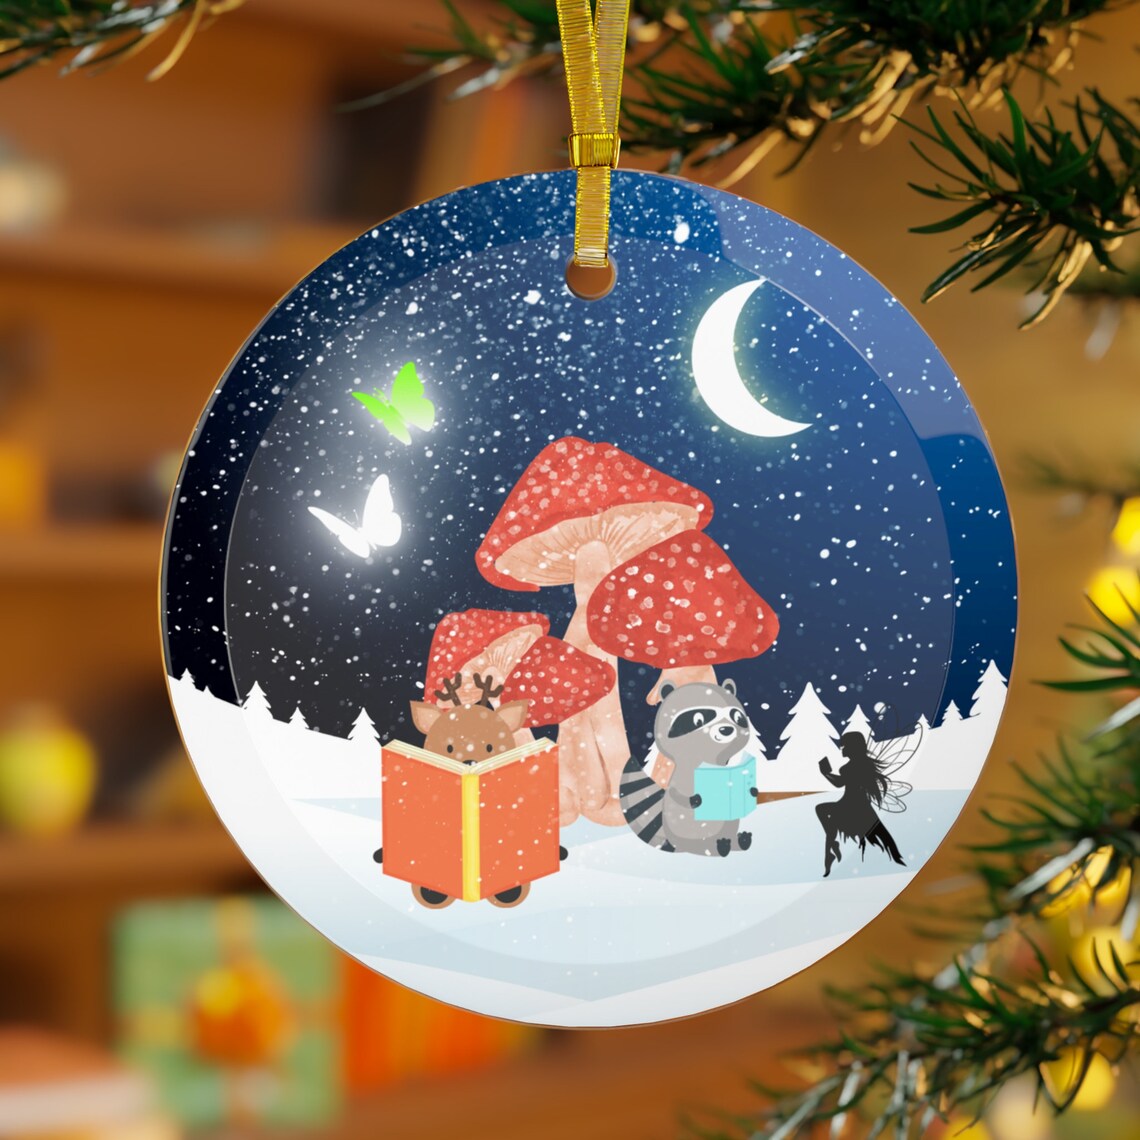 Children's Christmas Ornament by Island Boho Designs